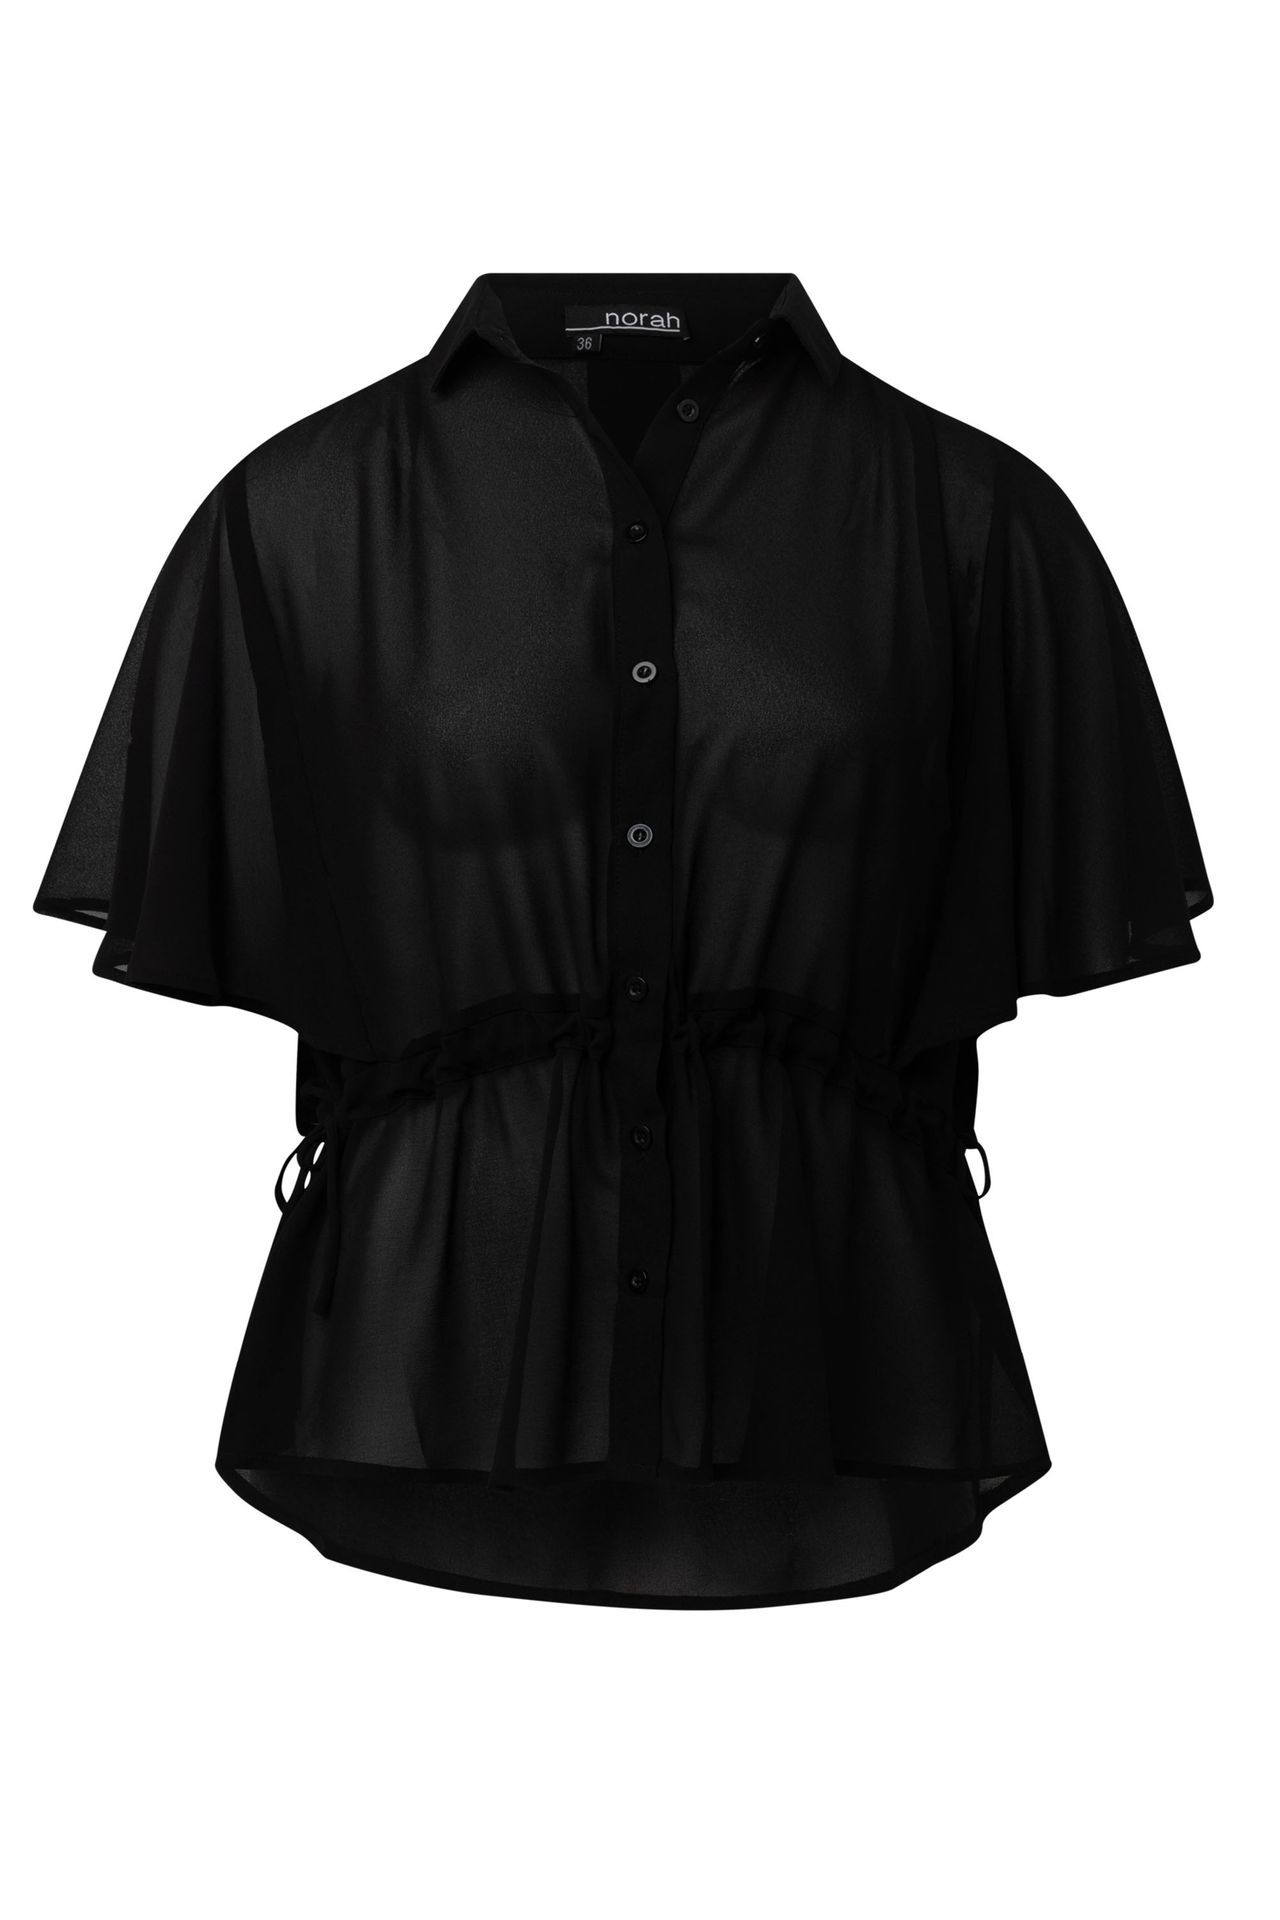 Norah Zwarte blouse black 214284-001